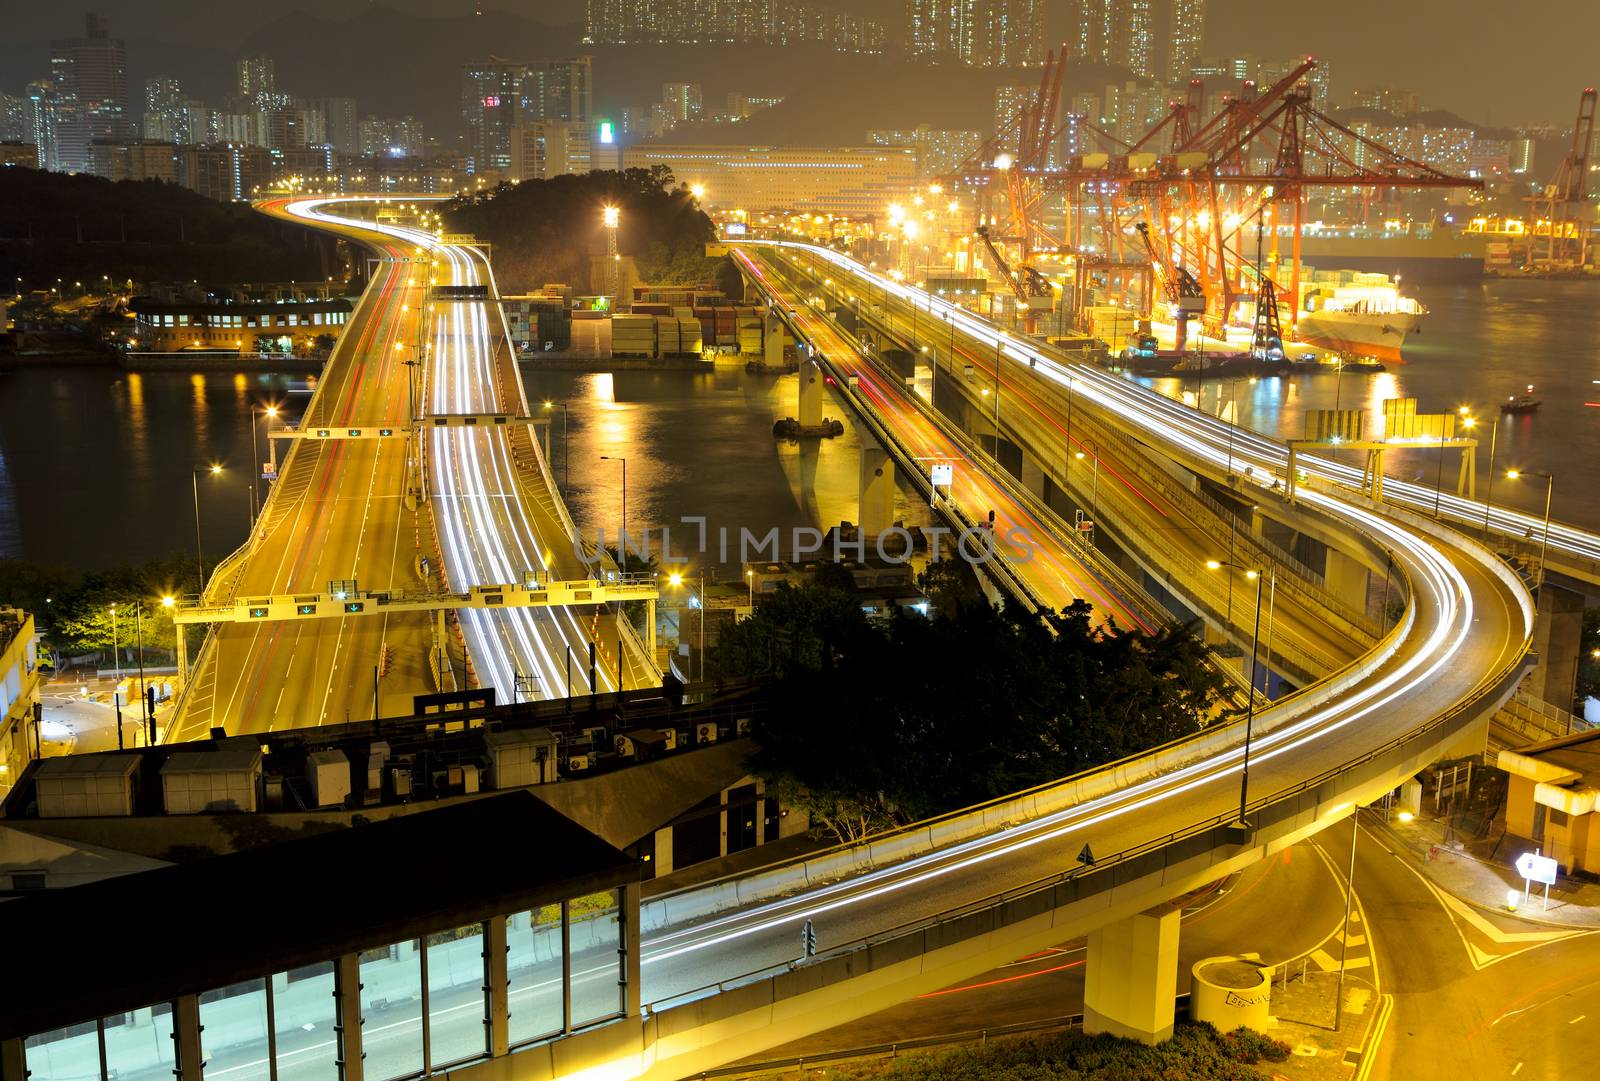 Transportation system in Hong Kong by leungchopan